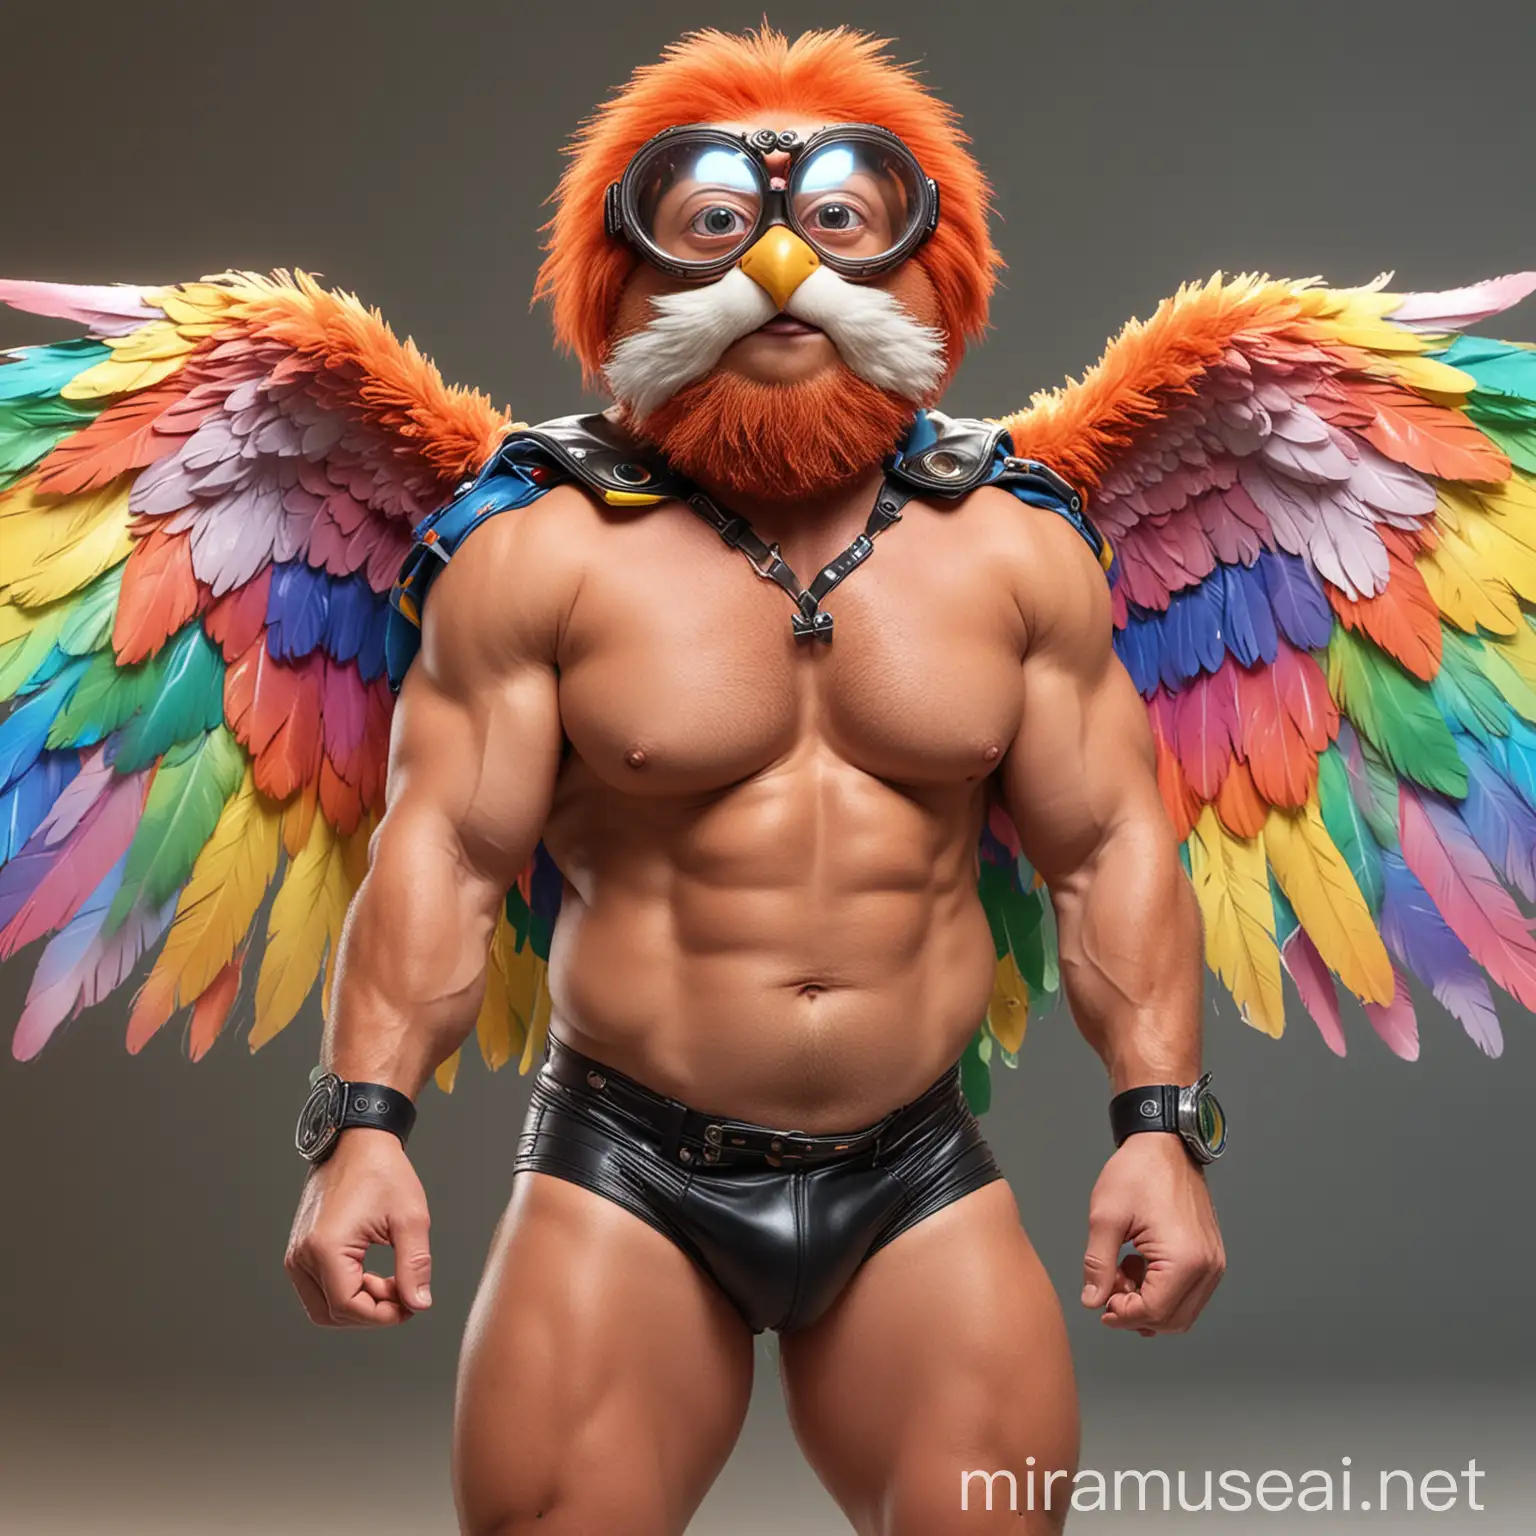 Red Head Bodybuilder Daddy Flexing Arm in Rainbow Eagle Wings Jacket